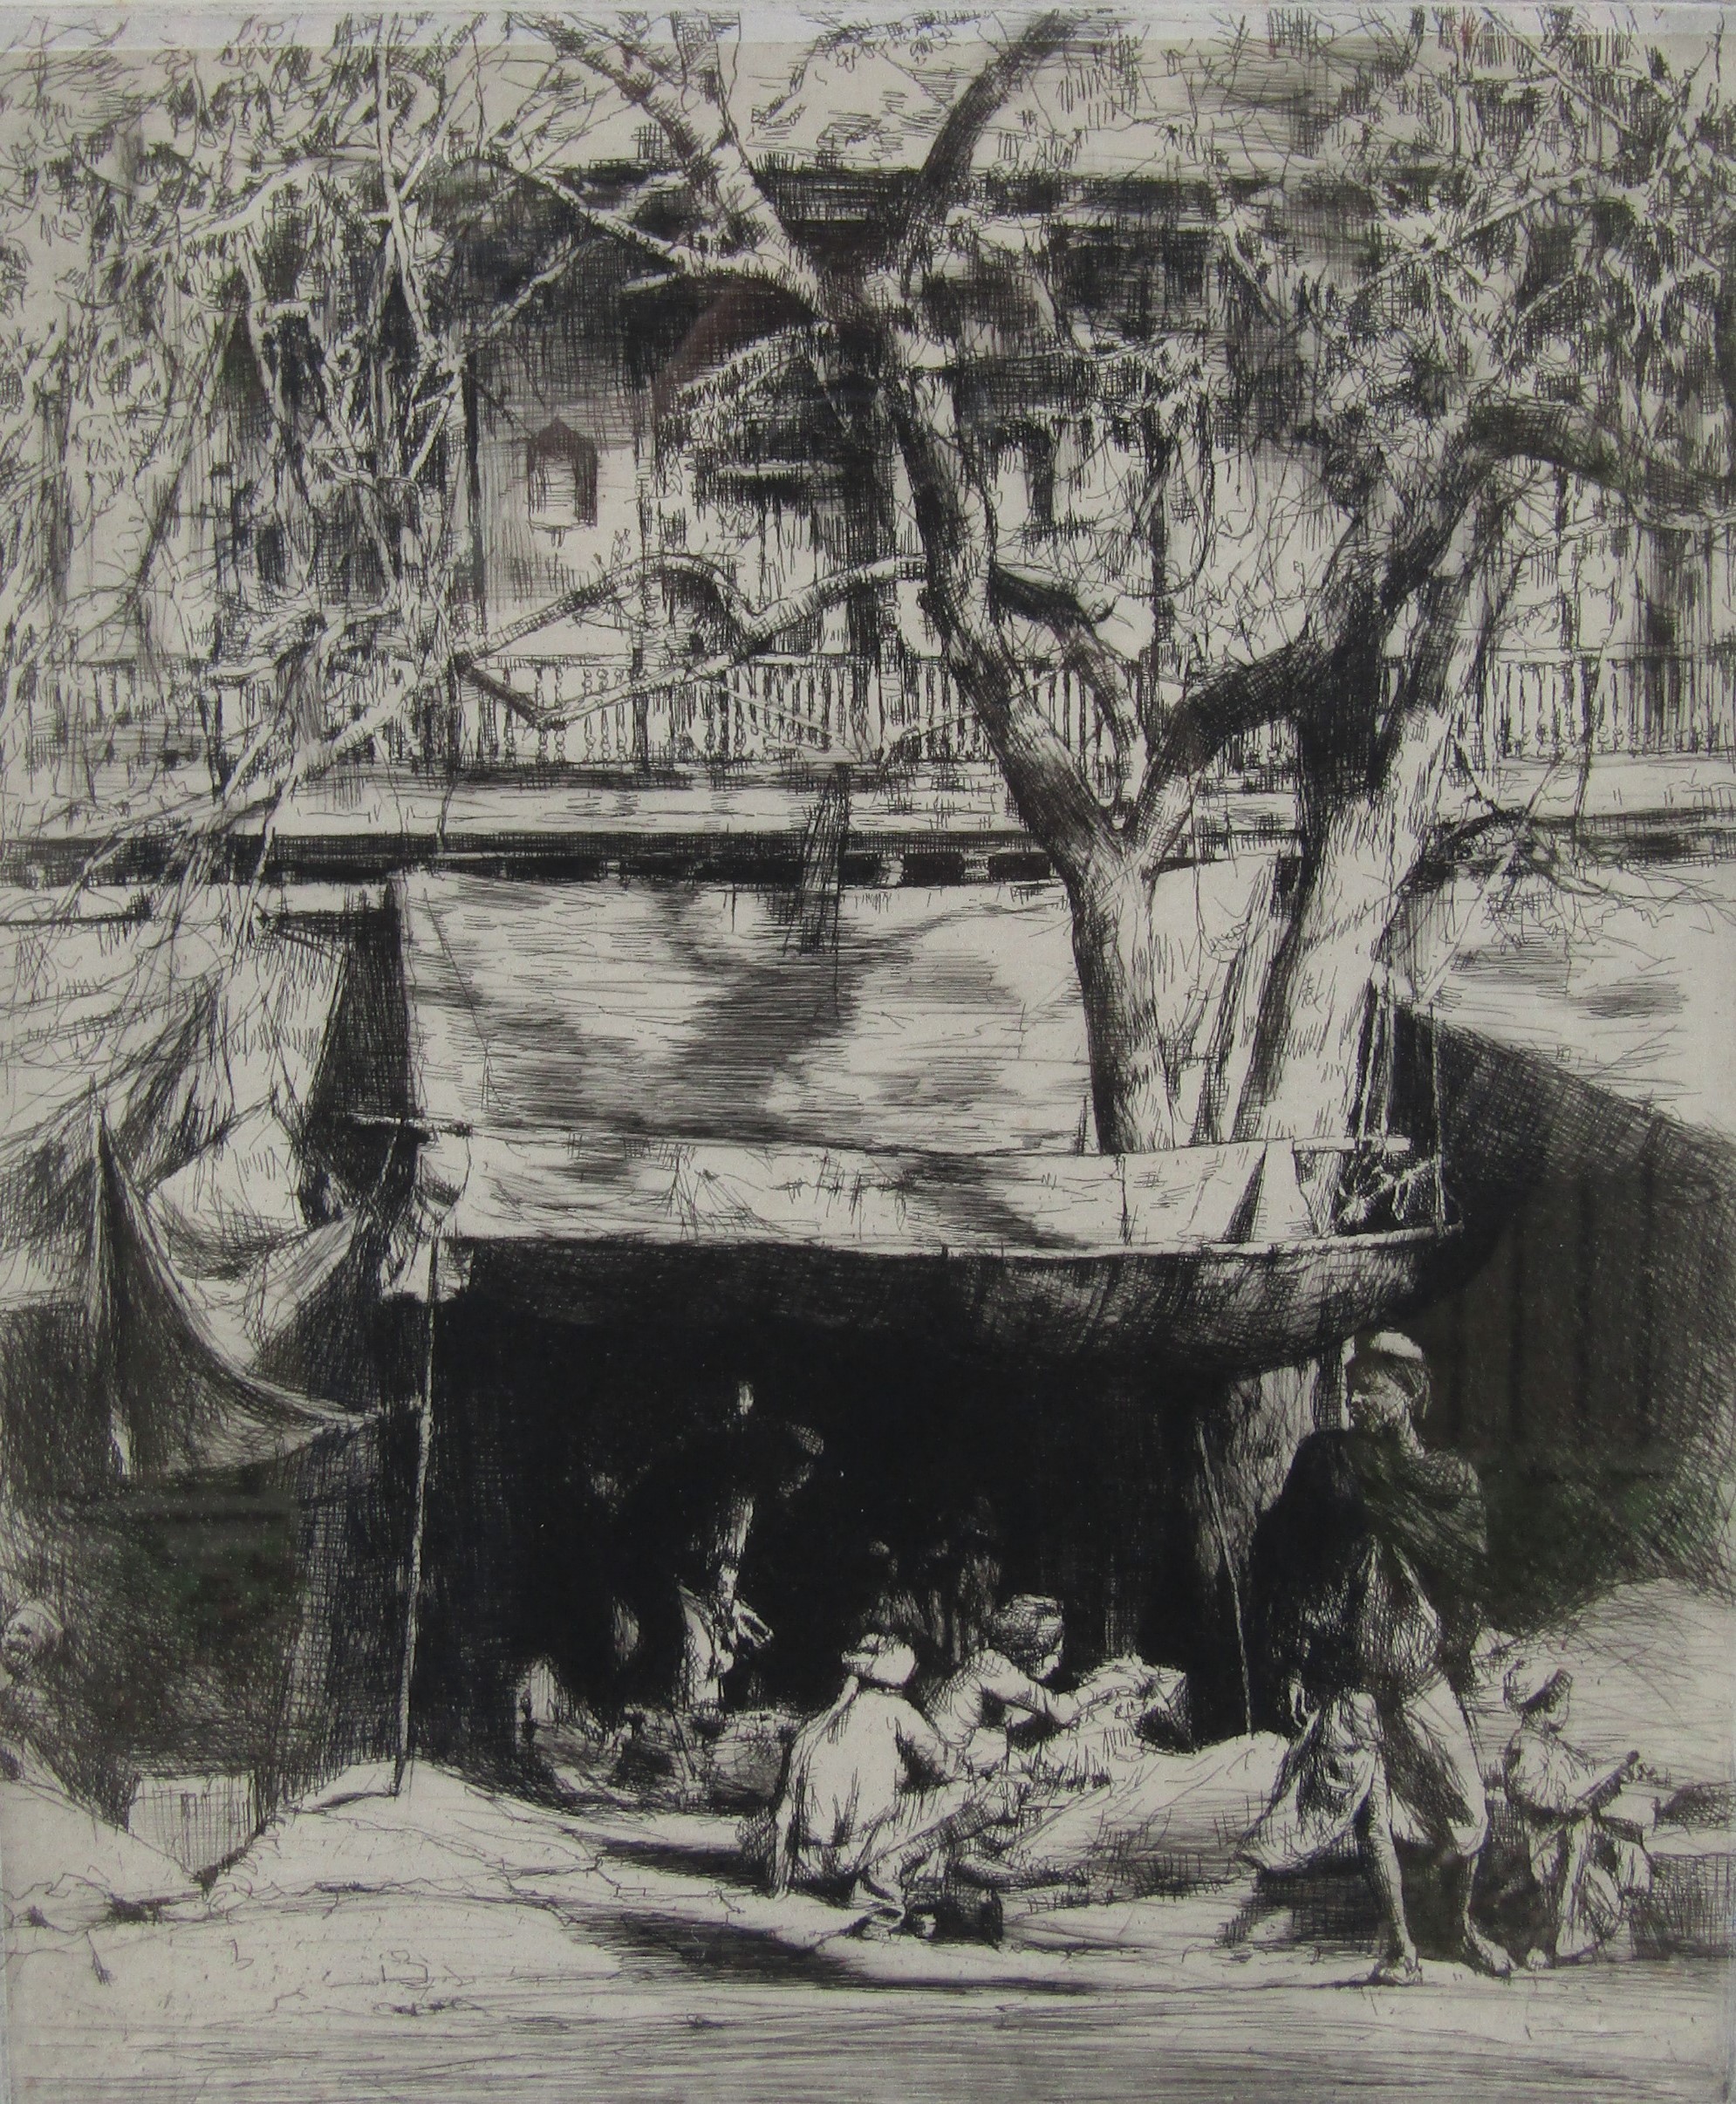 MORTIMER LUDDINGTON MENPES (Australian 1855-1938) 'At Delhi' - drypoint etching. Pencil signed - Image 2 of 5